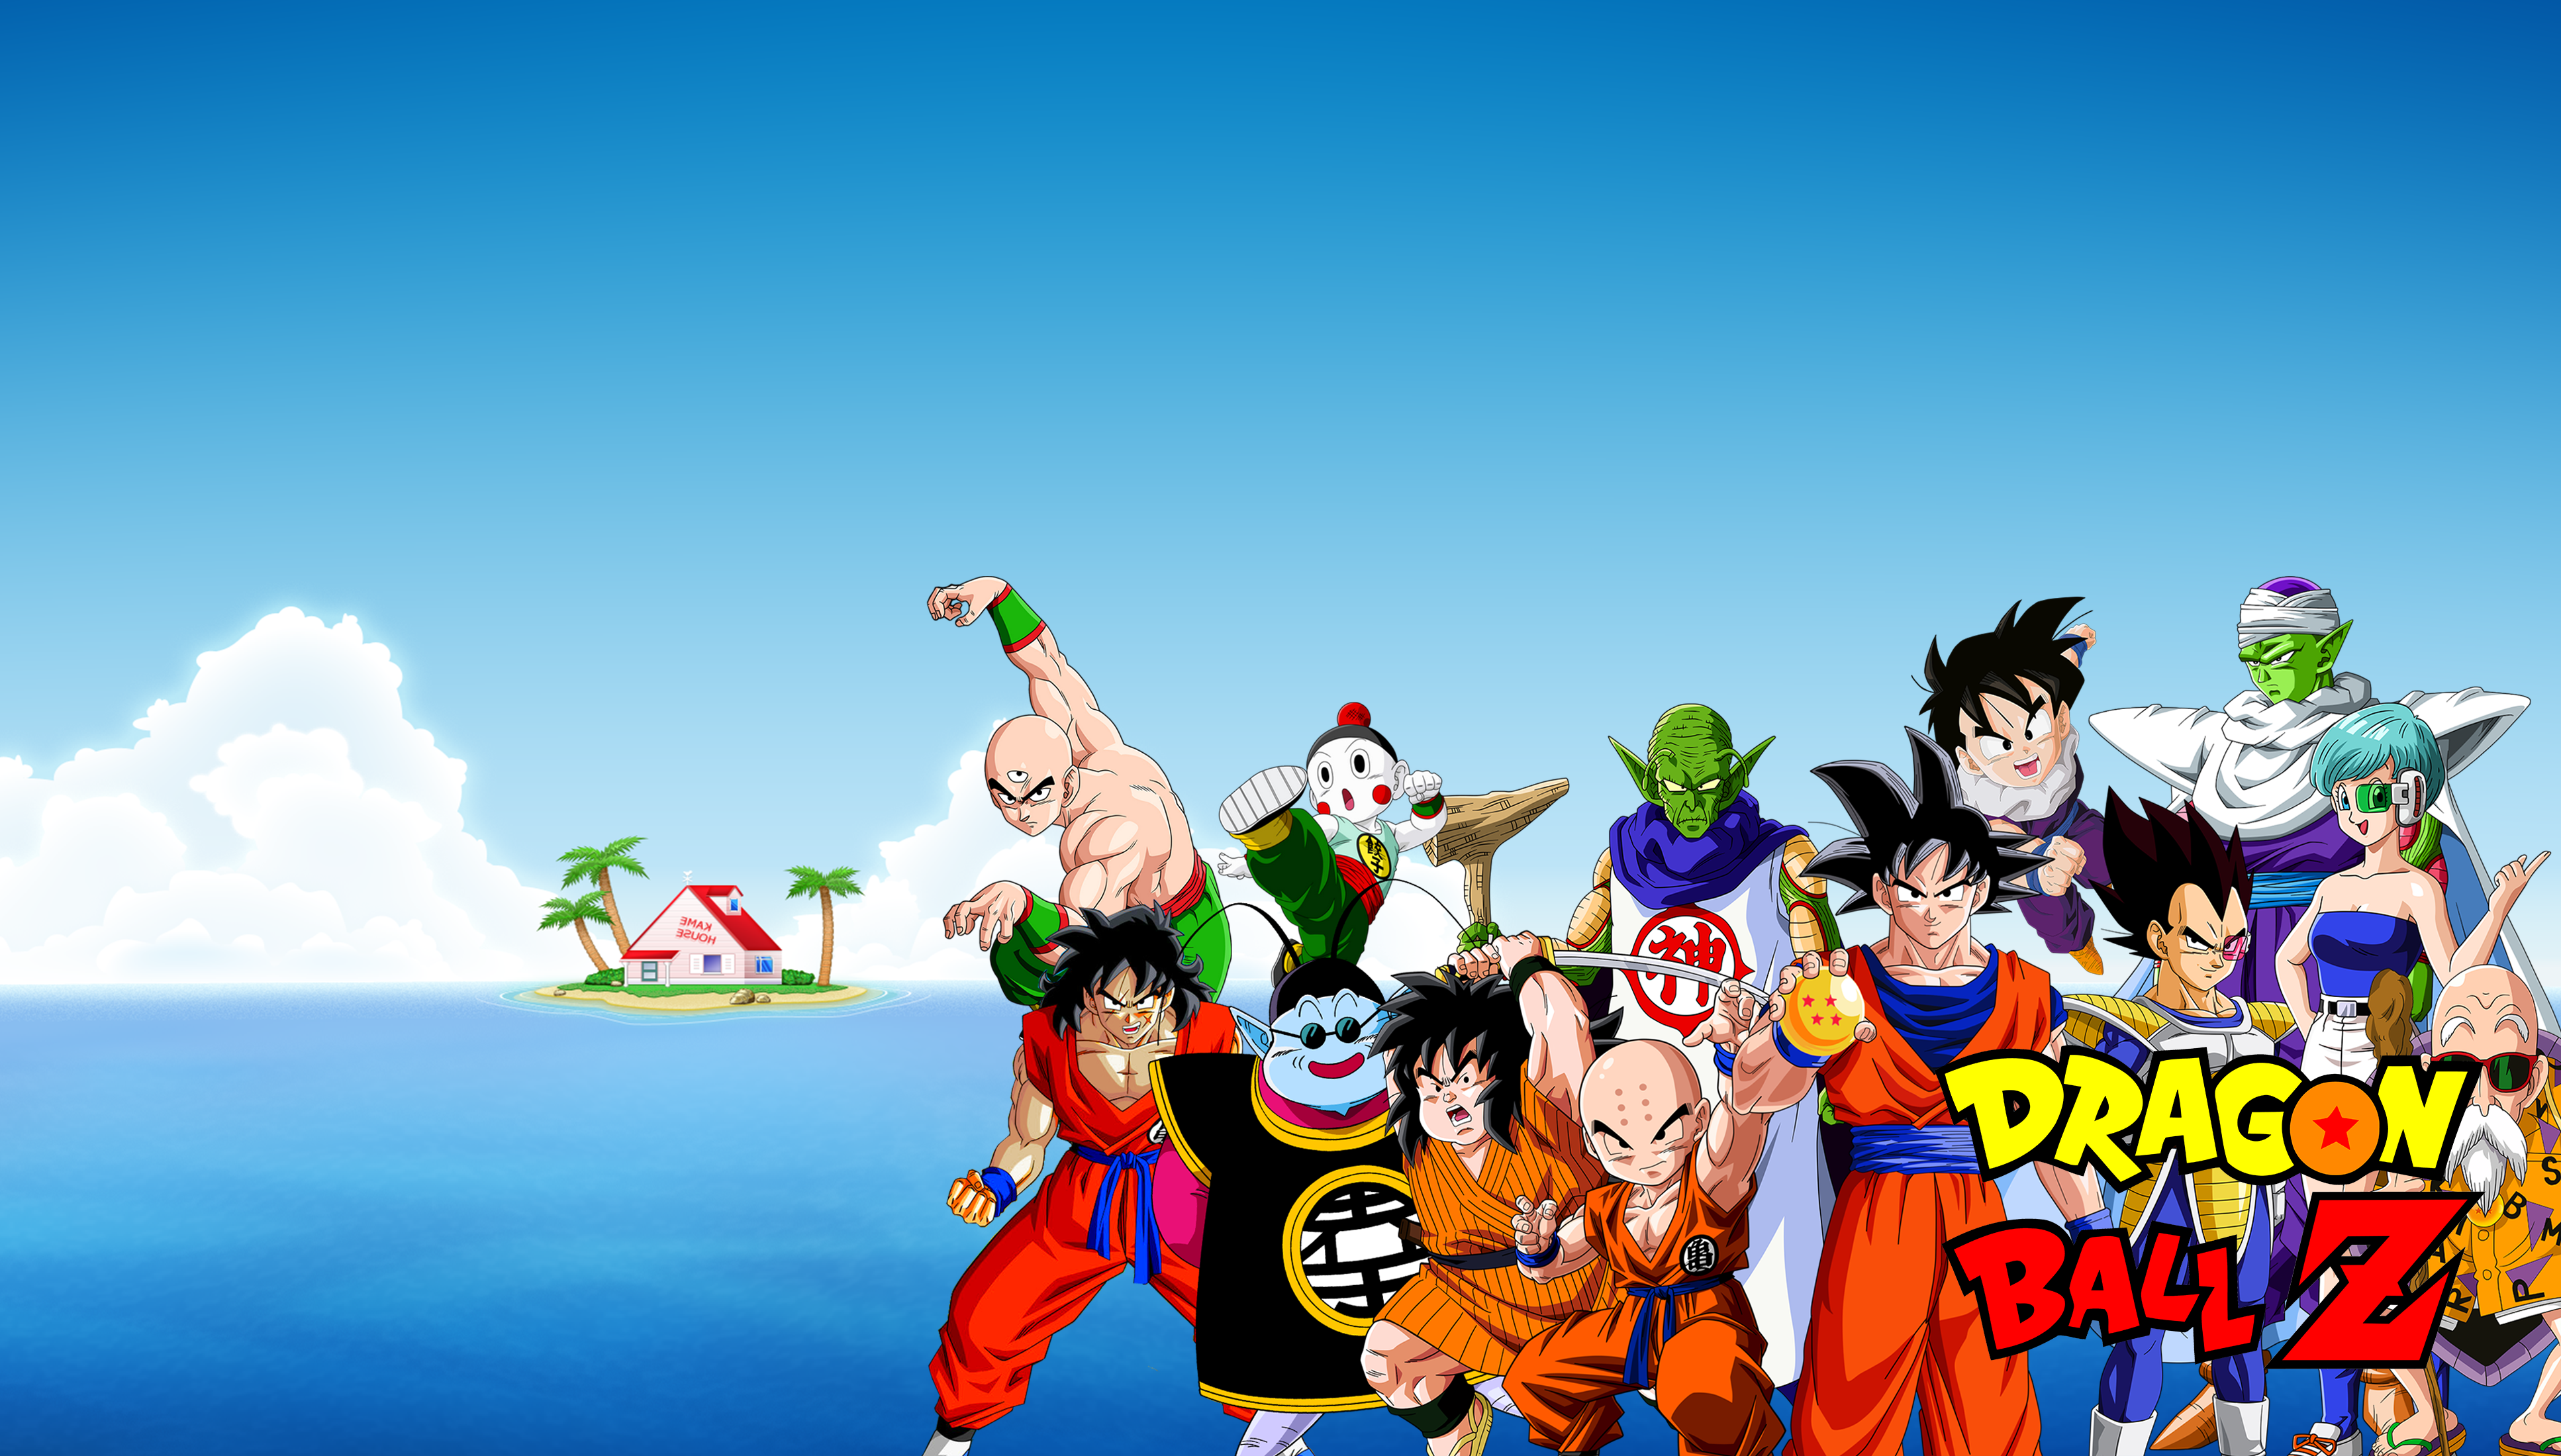  Dragon  Ball  Z  4k  Ultra HD Wallpaper  Background Image 